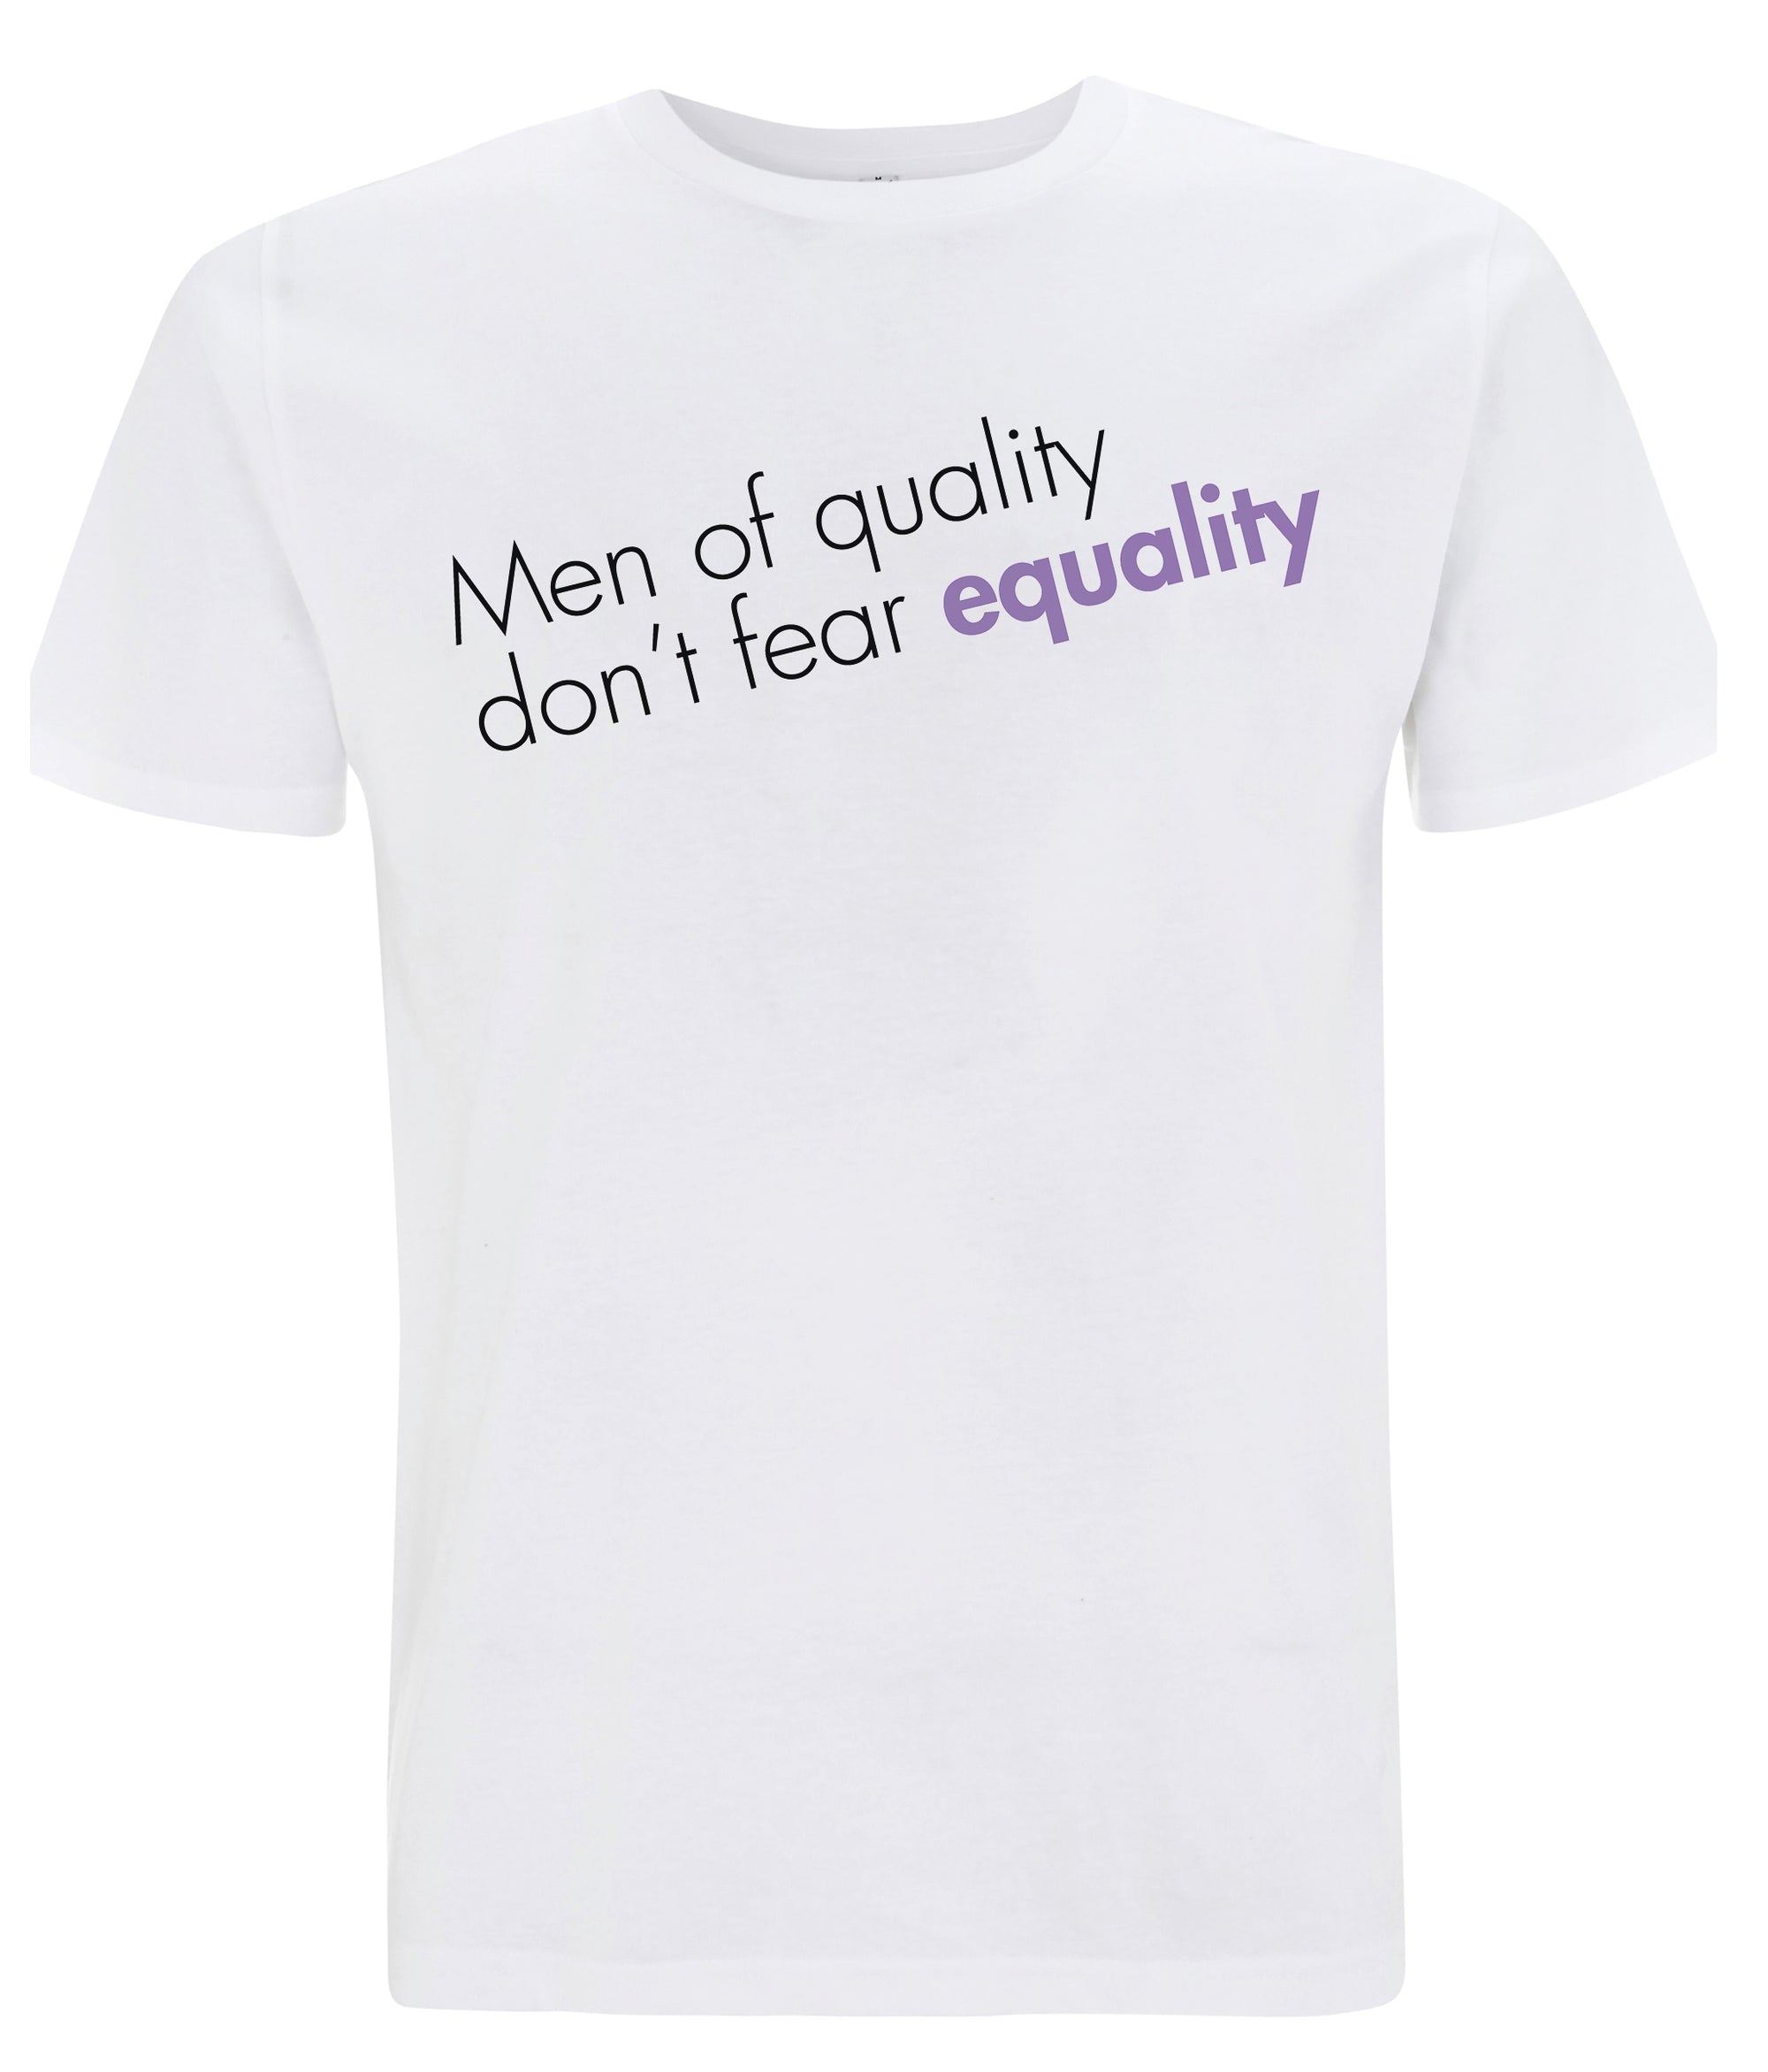 Men Of Quality Don't Fear Equality Organic Feminist T Shirt Black